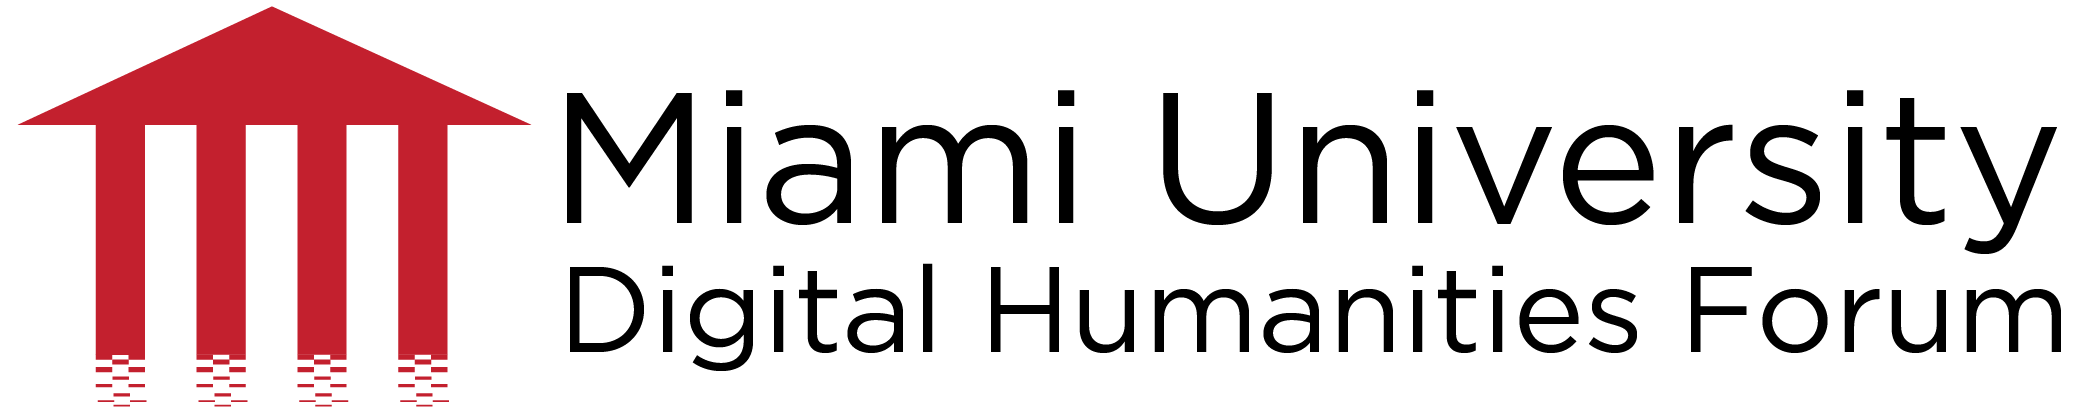 Miami University Digital Humanities Forum logo